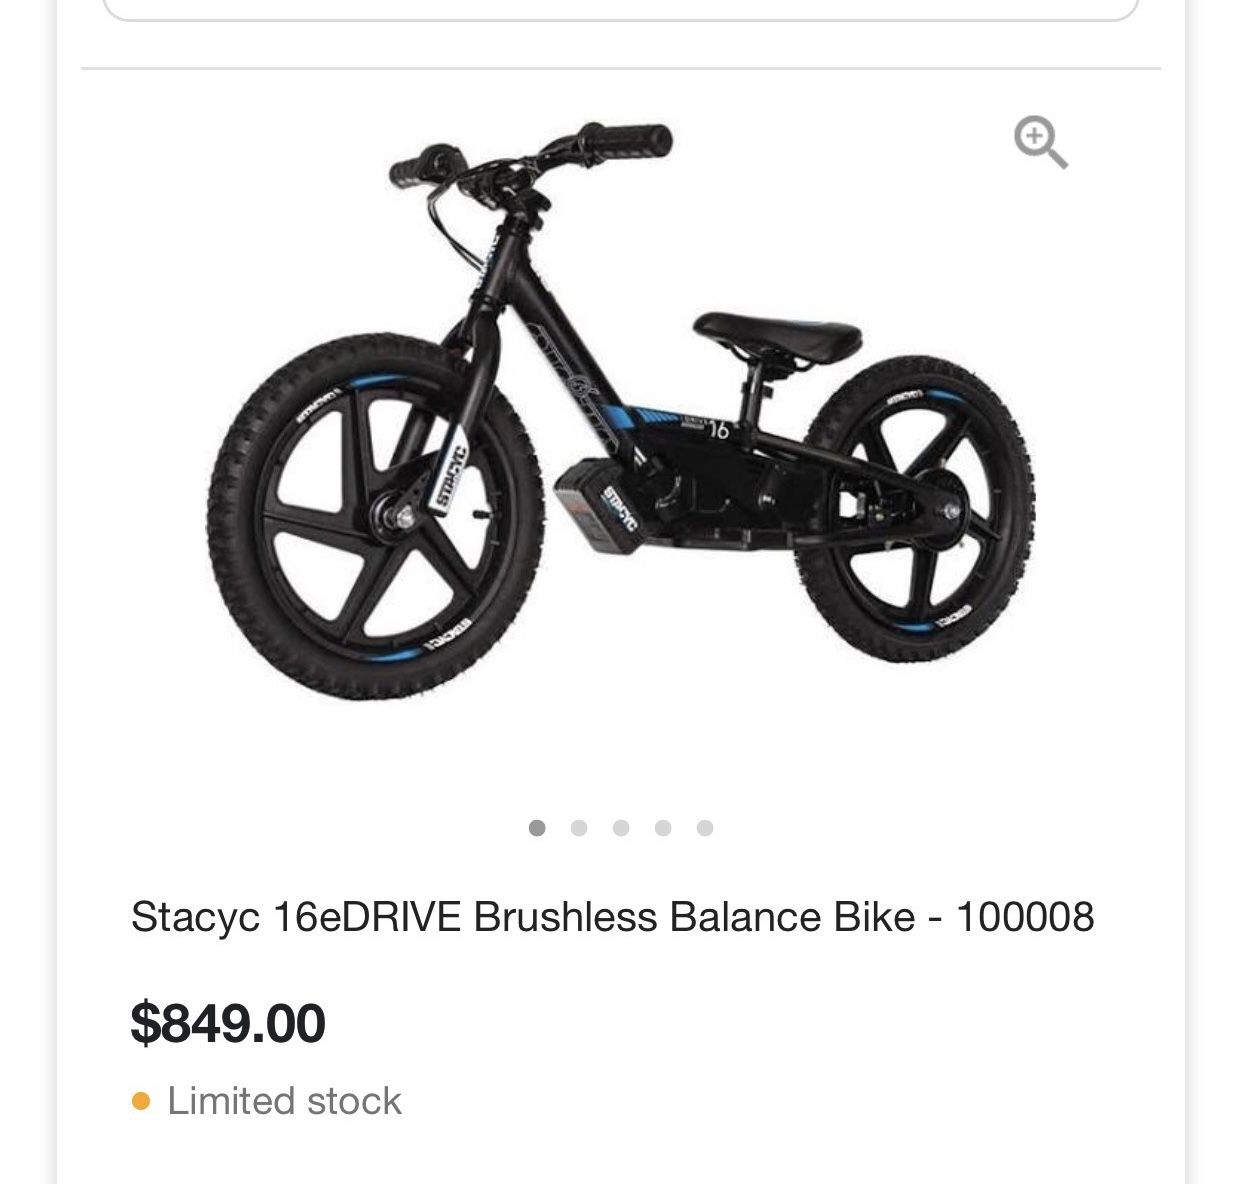 StacyC 16eDrive Brushless Balance Bike